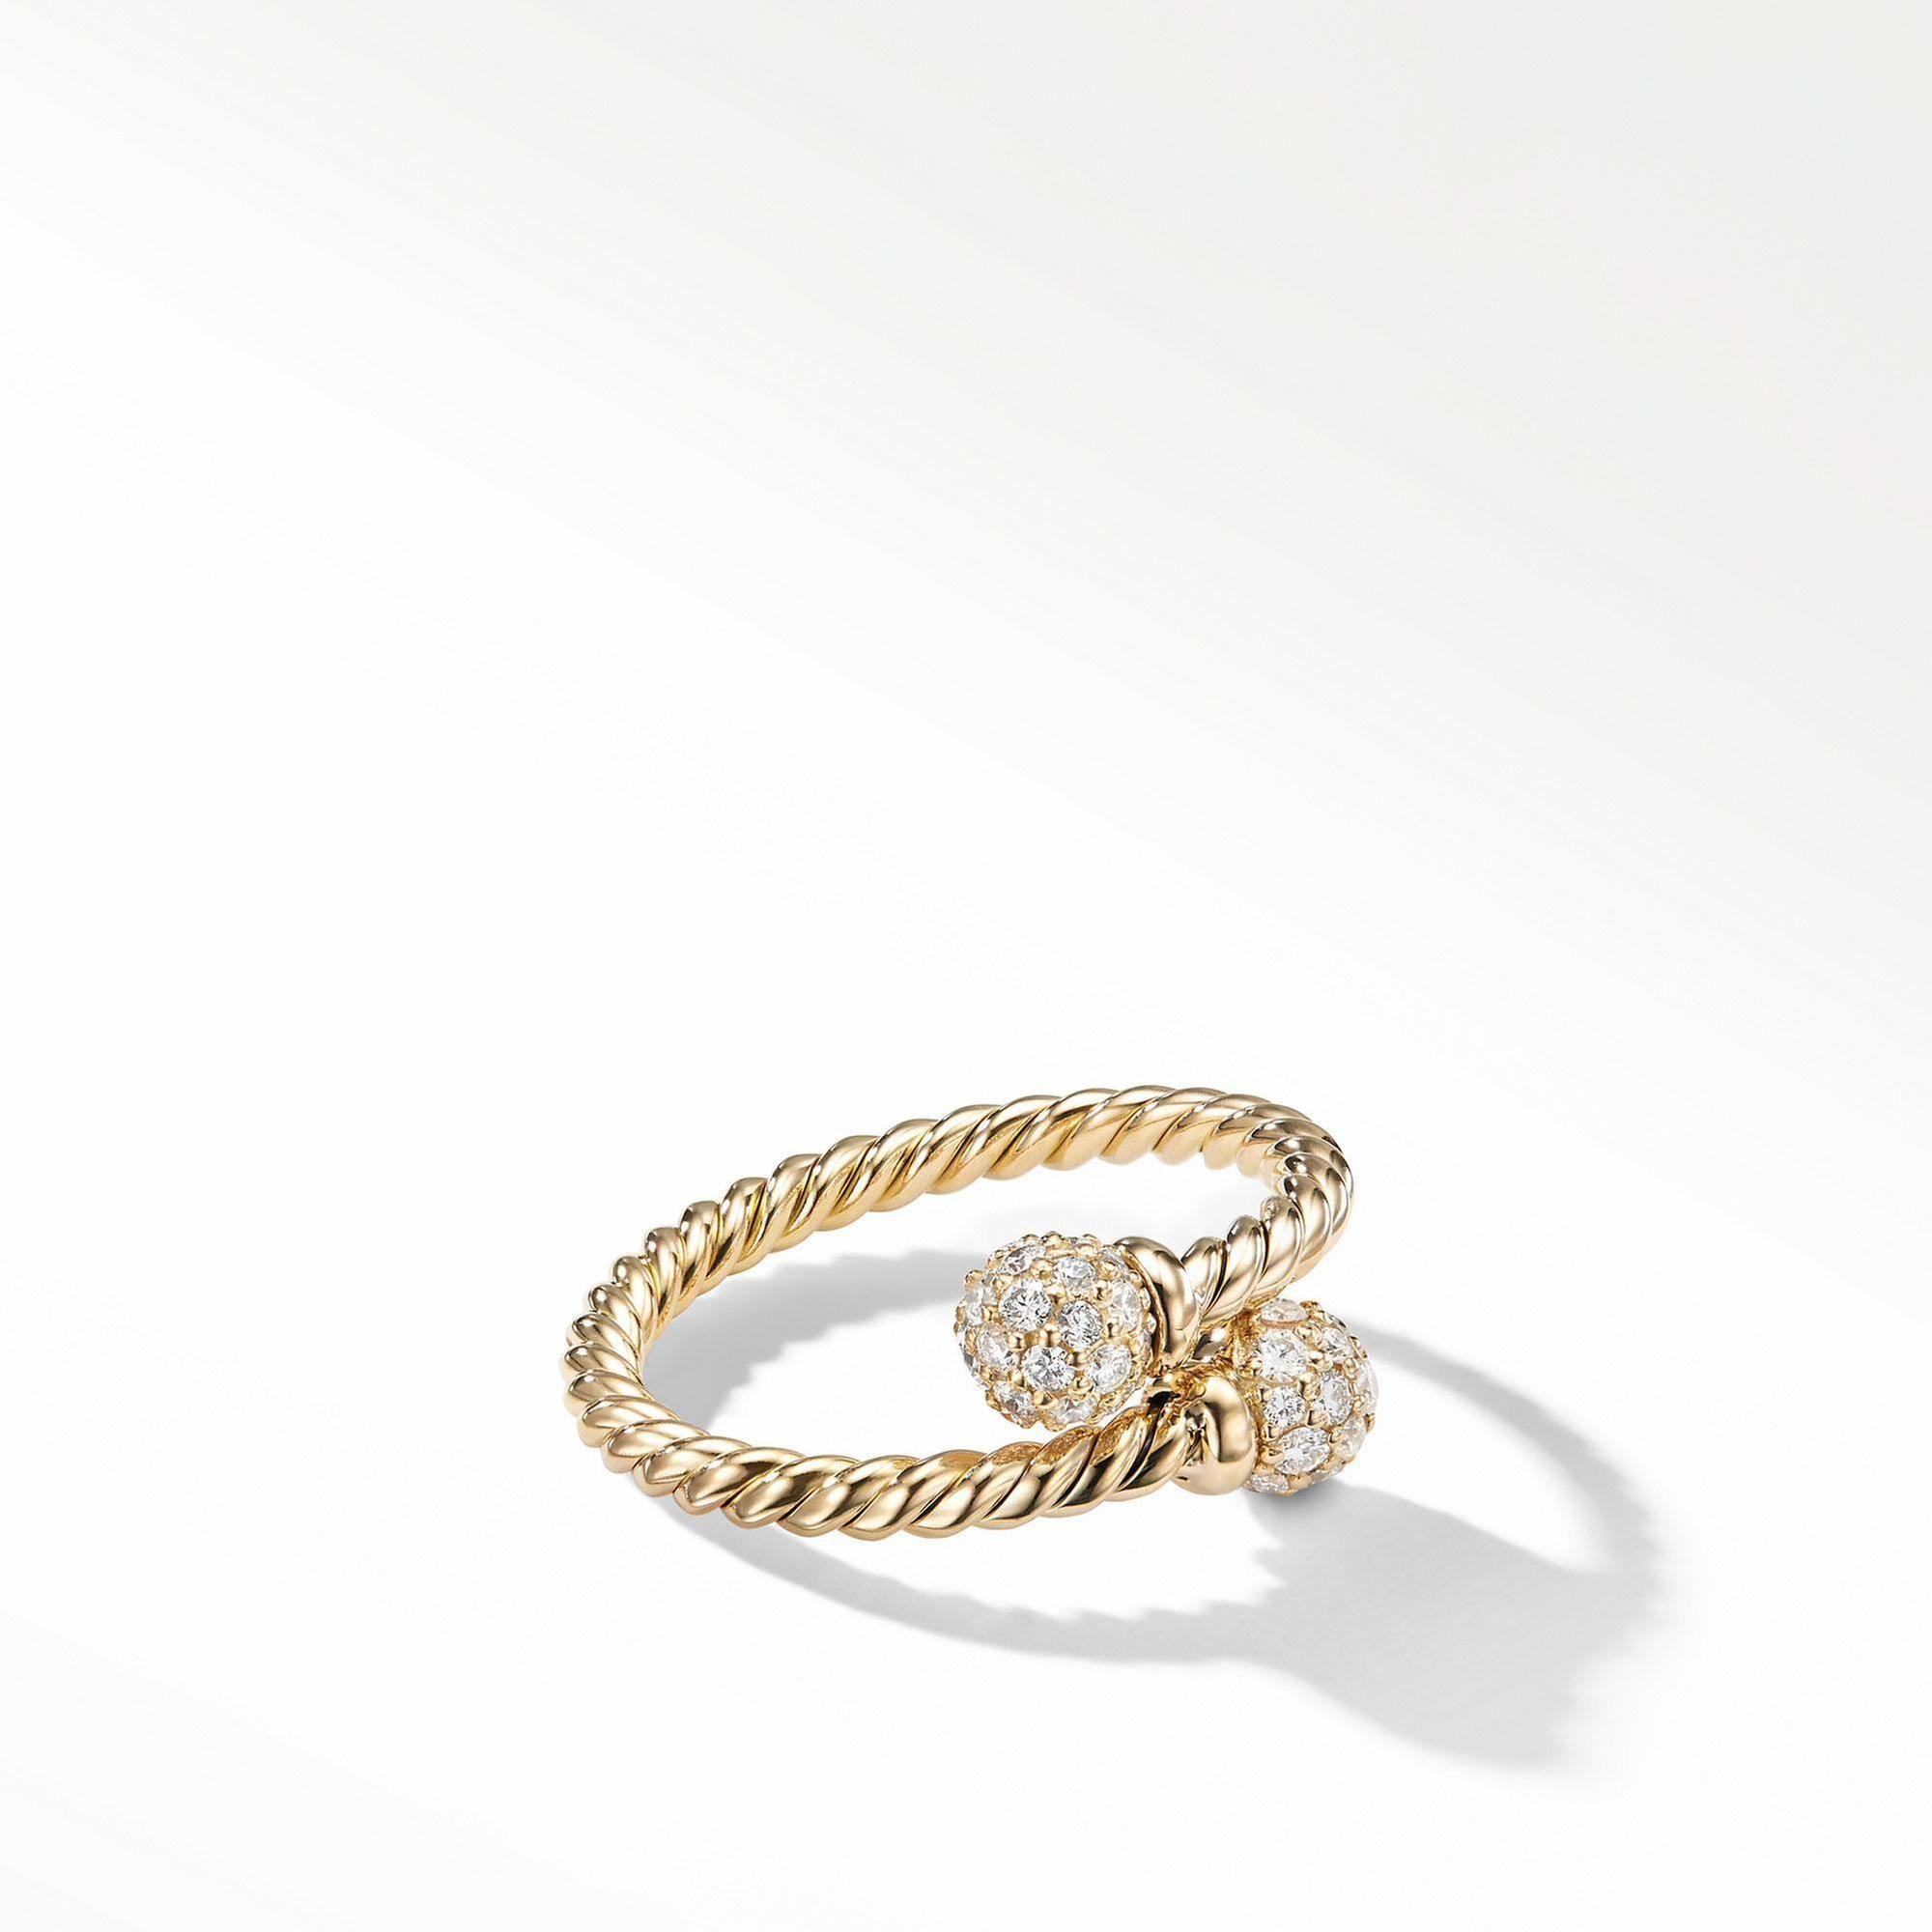 David Yurman Petite Solari Bypass Ring with Diamonds in 18k Gold - Size 6